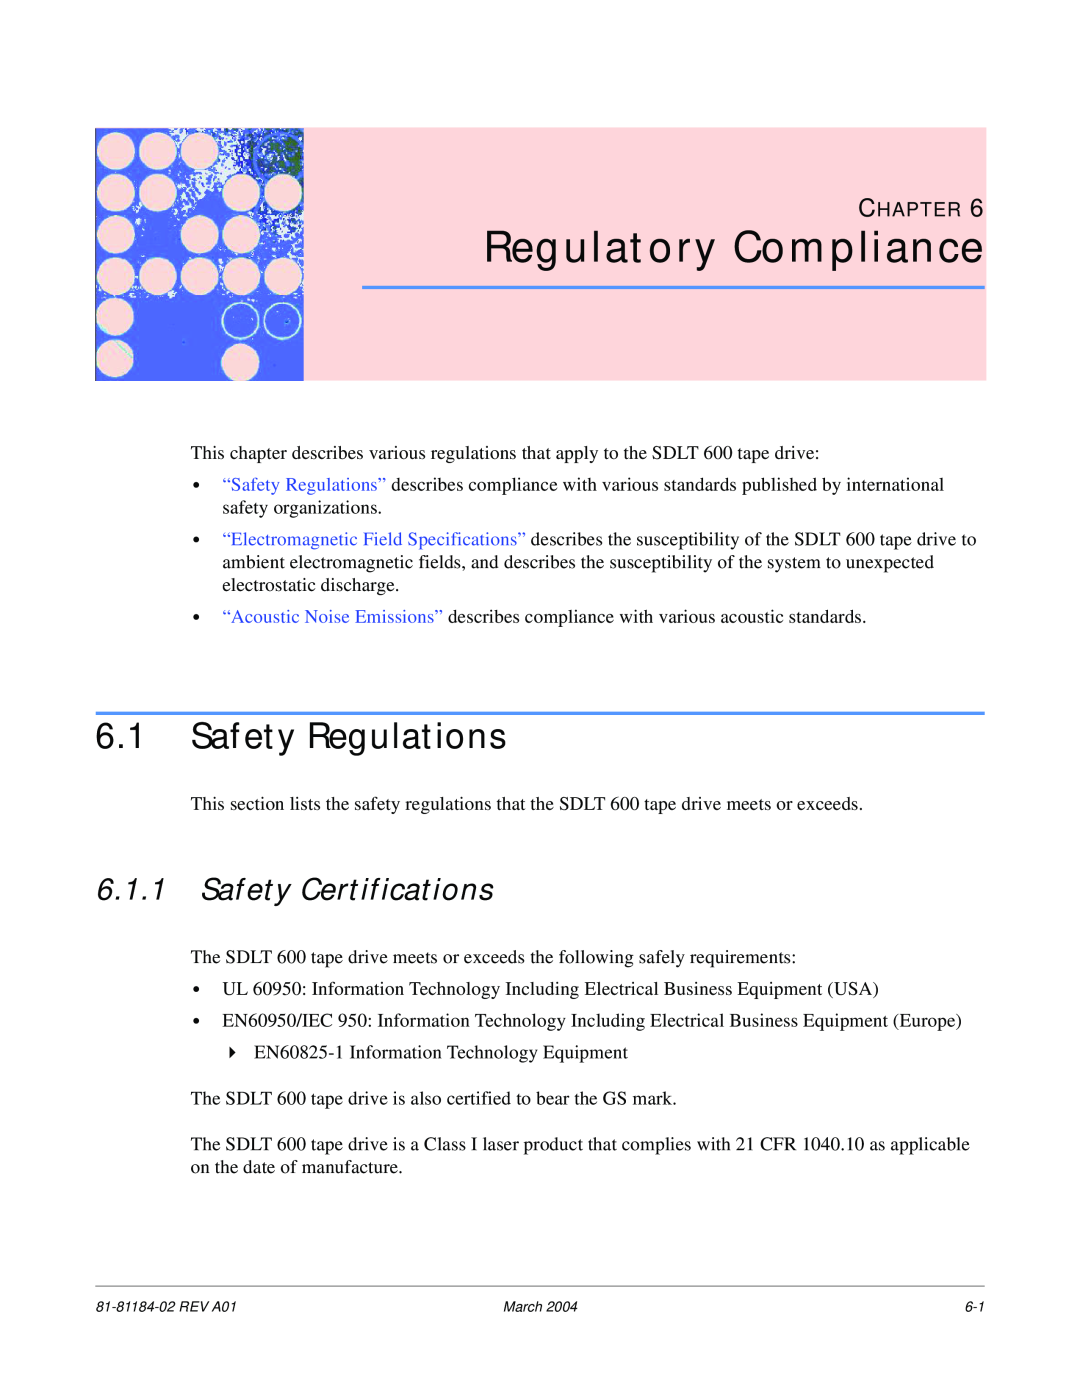 Tandberg Data 600 manual Regulatory Compliance, Safety Regulations, Safety Certifications, Chapter 